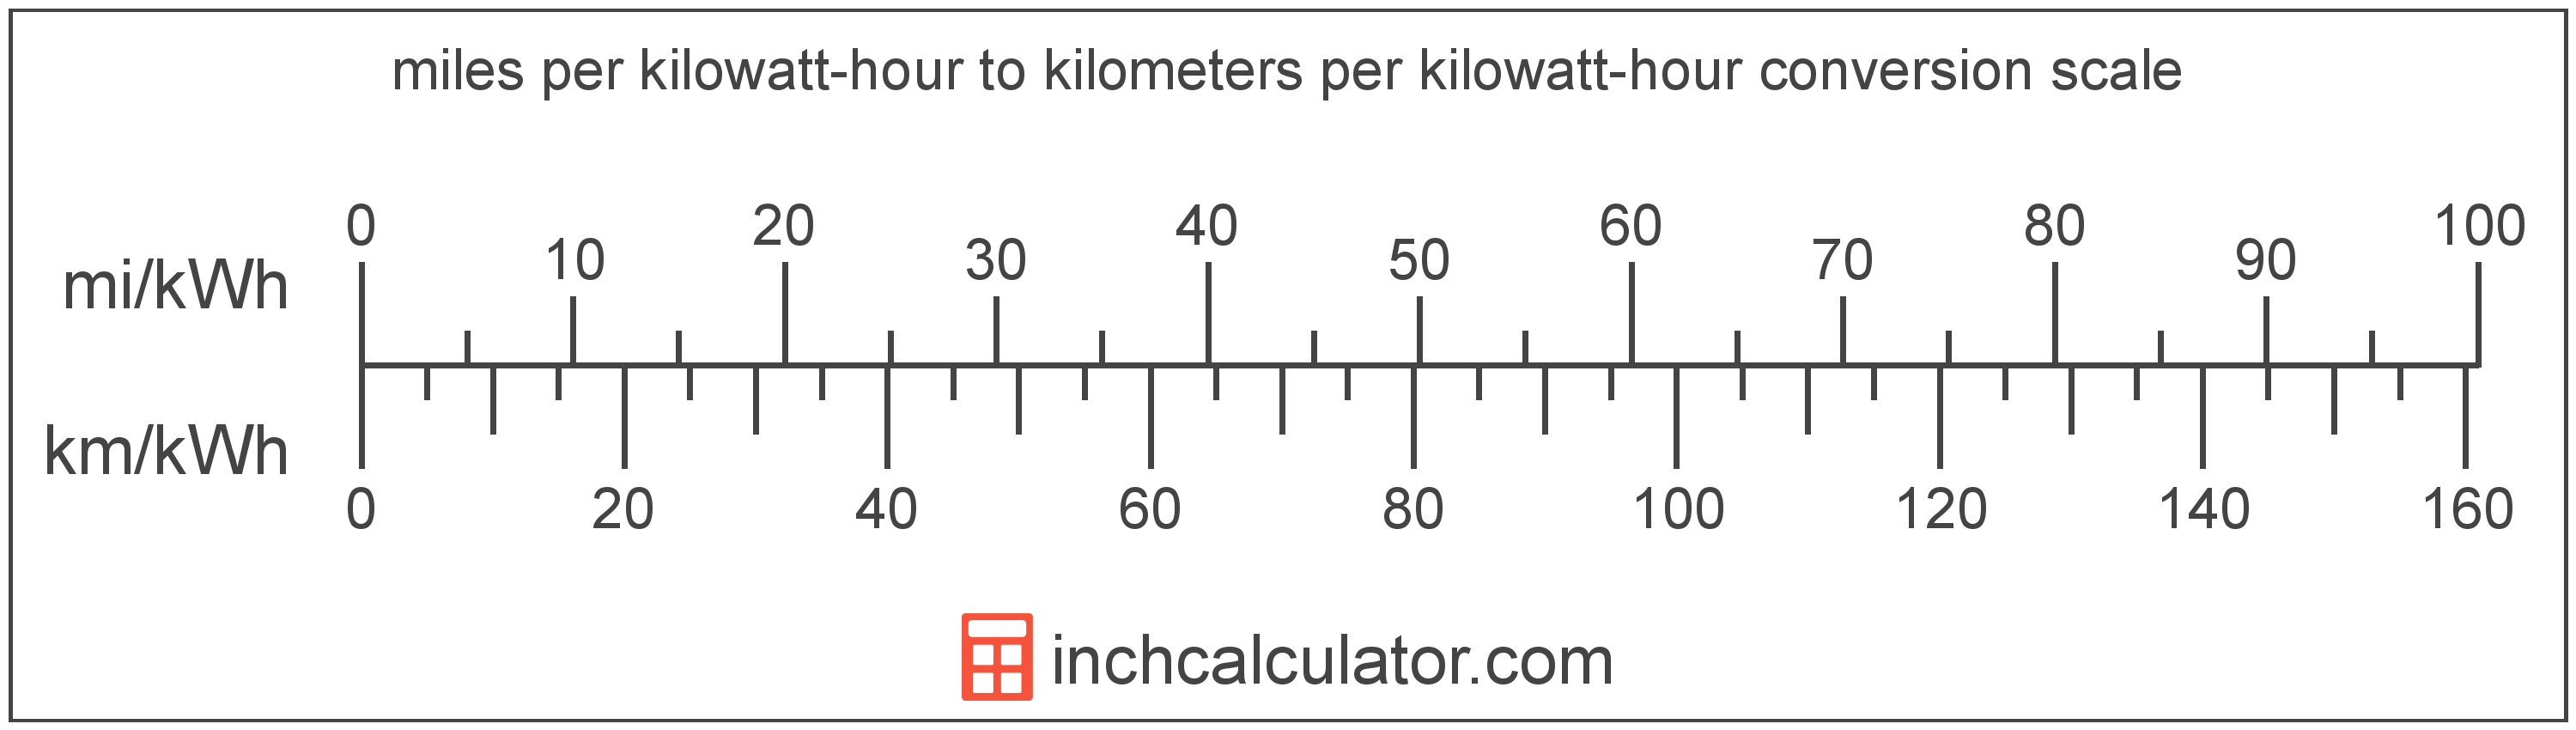 miles-per-kilowatt-hour-to-kilometers-per-kilowatt-hour-conversion